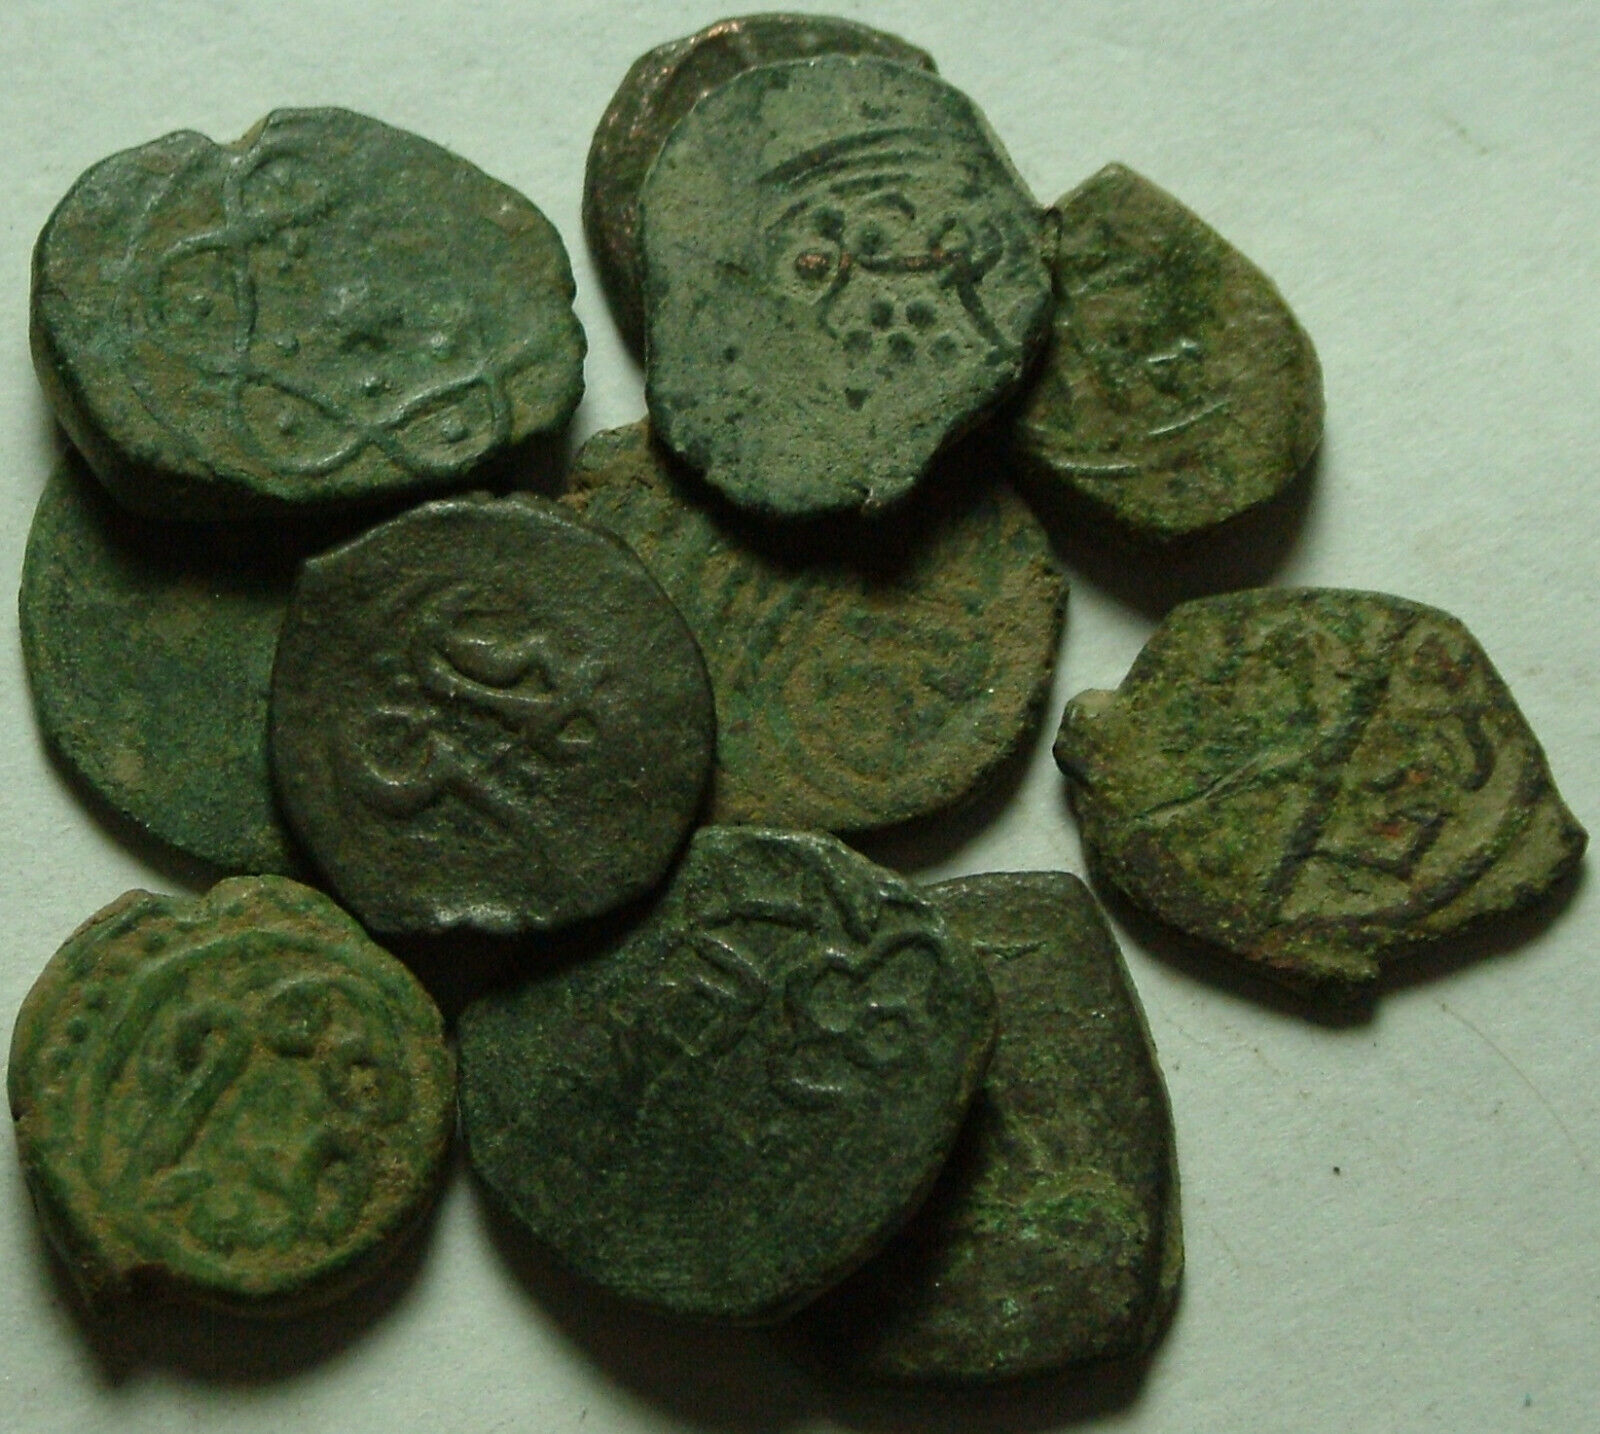 Lot 3 Rare original Islamic copper Bronze Mangir coins/Arabic/Ottoman Empire 15c Без бренда - фотография #11